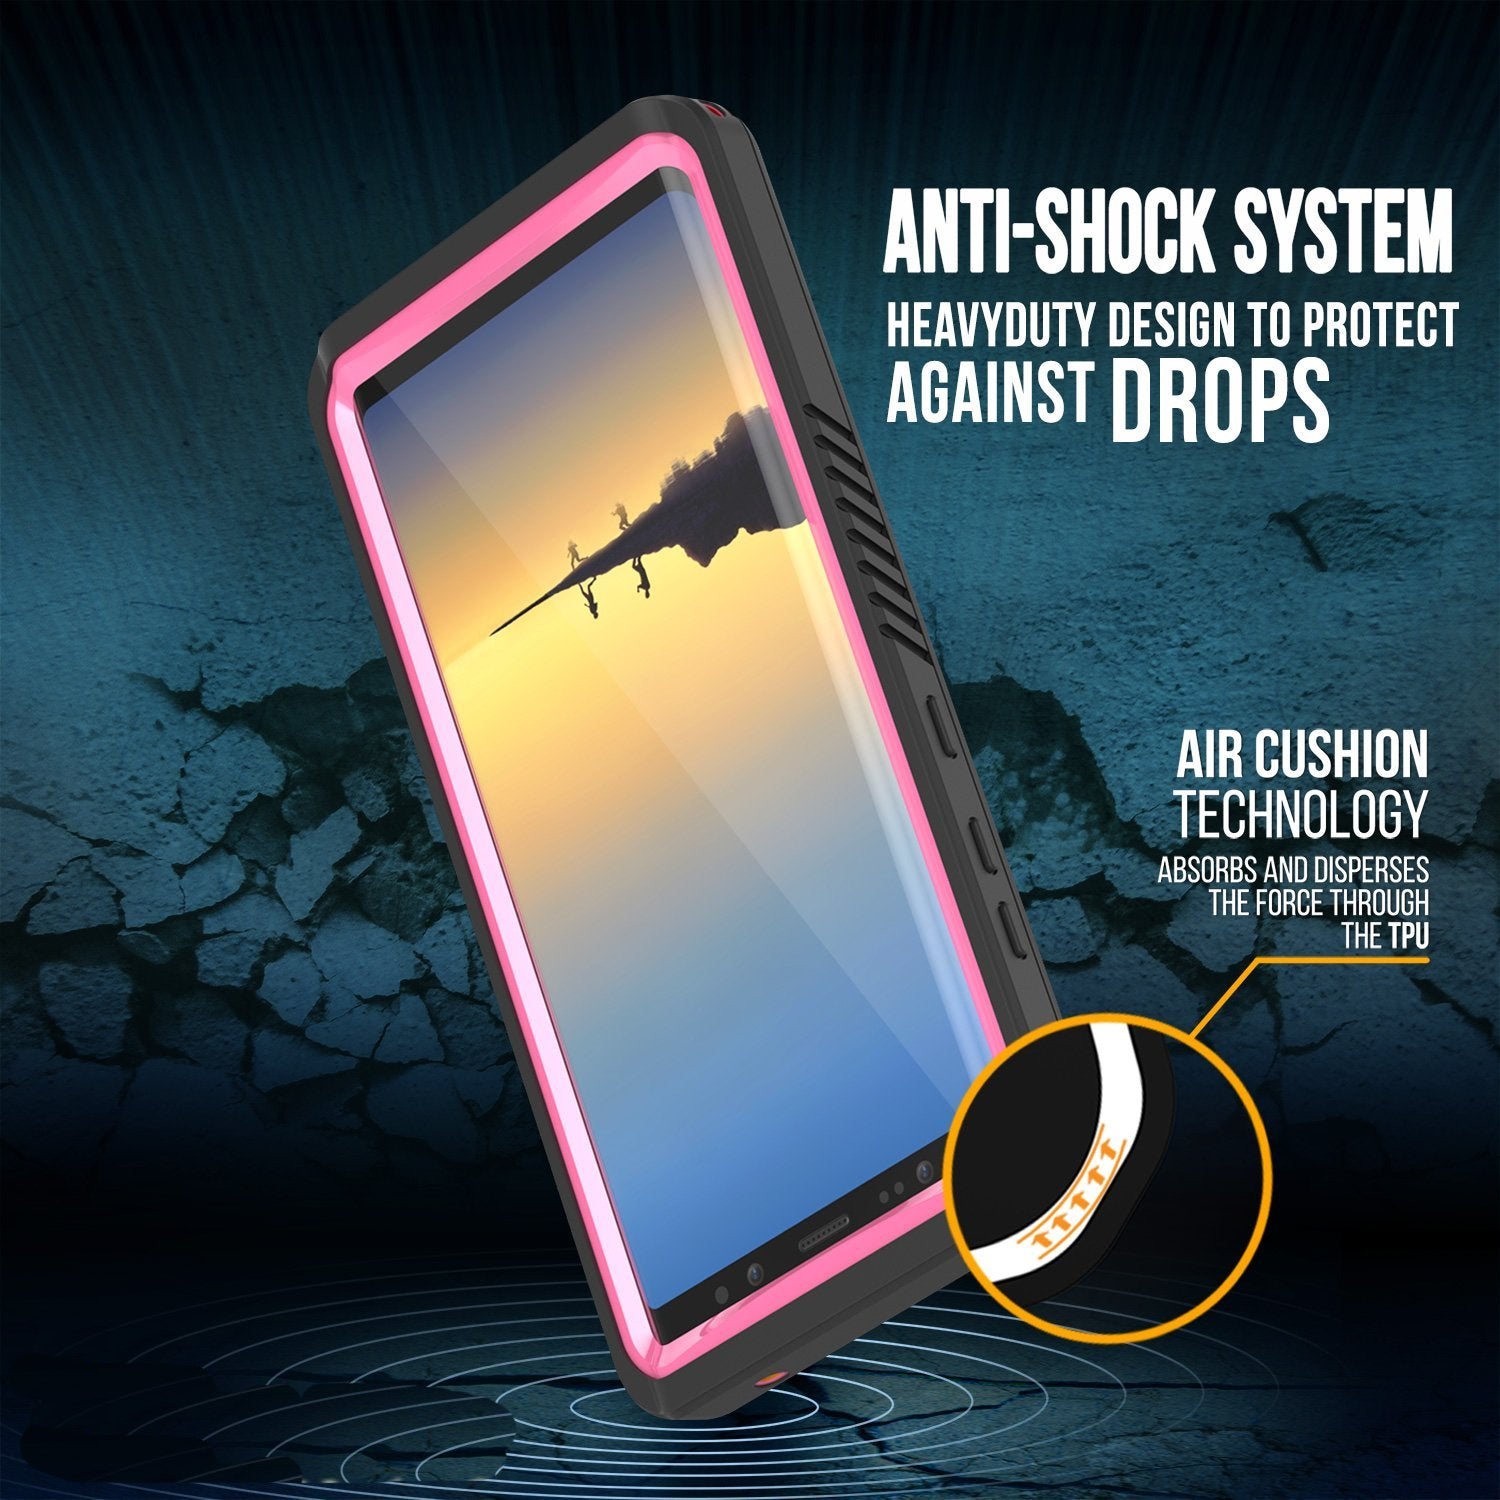 Galaxy Note 8 Case, Punkcase [Extreme Series] [Slim Fit] [IP68 Certified] [Waterproof] [Shockproof] [Dirproof] Armor Cover W/ Built In Screen Protector [Pink]